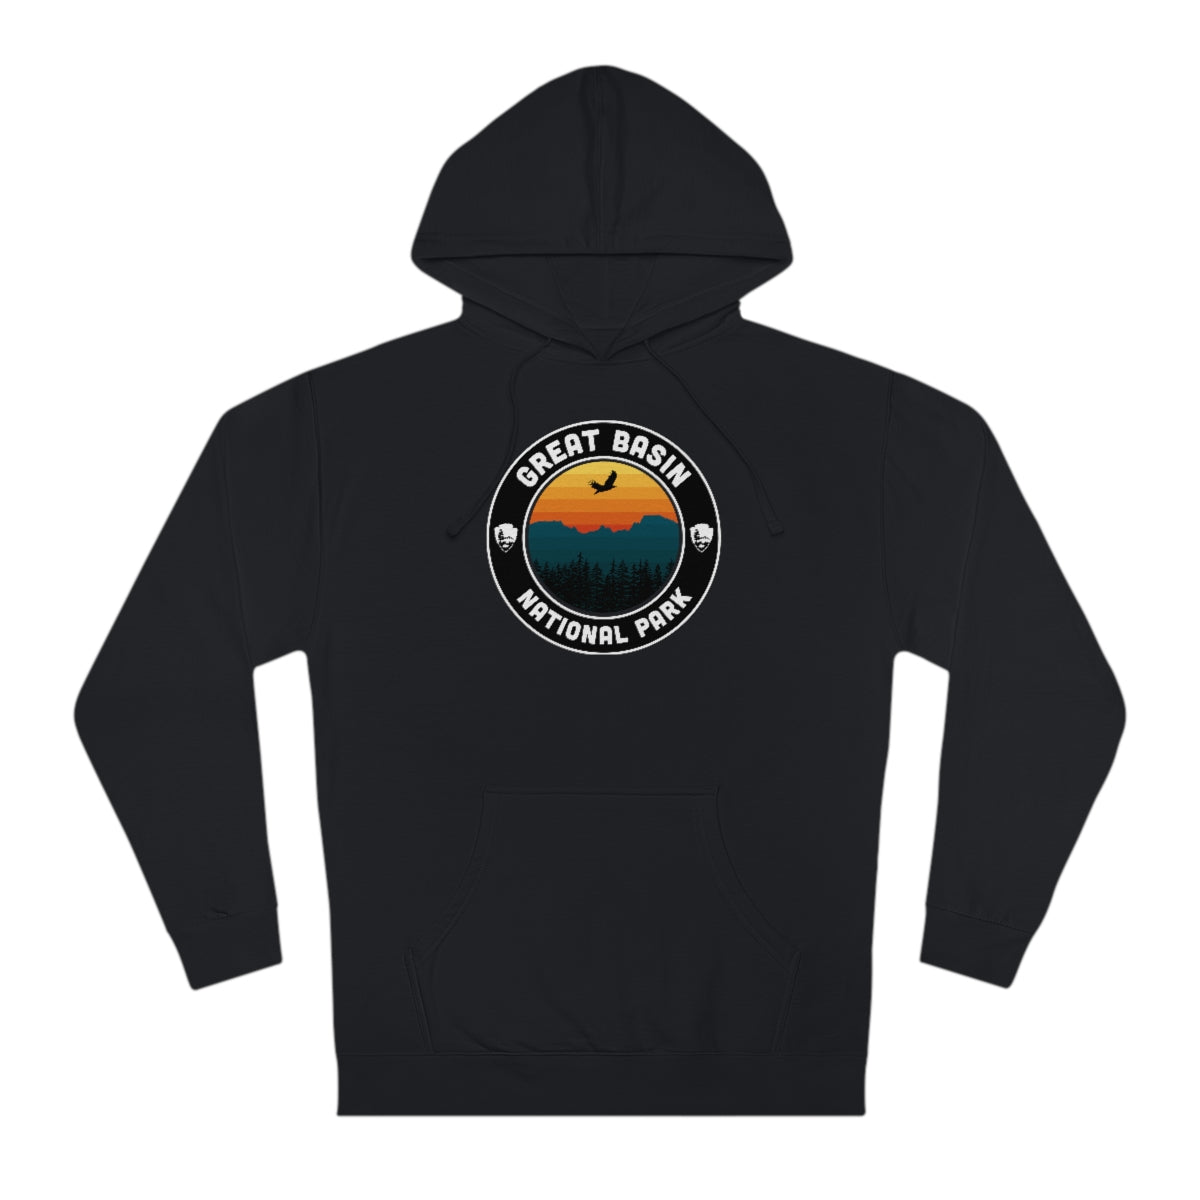 Great Basin National Park Hoodie - Round Emblem Design